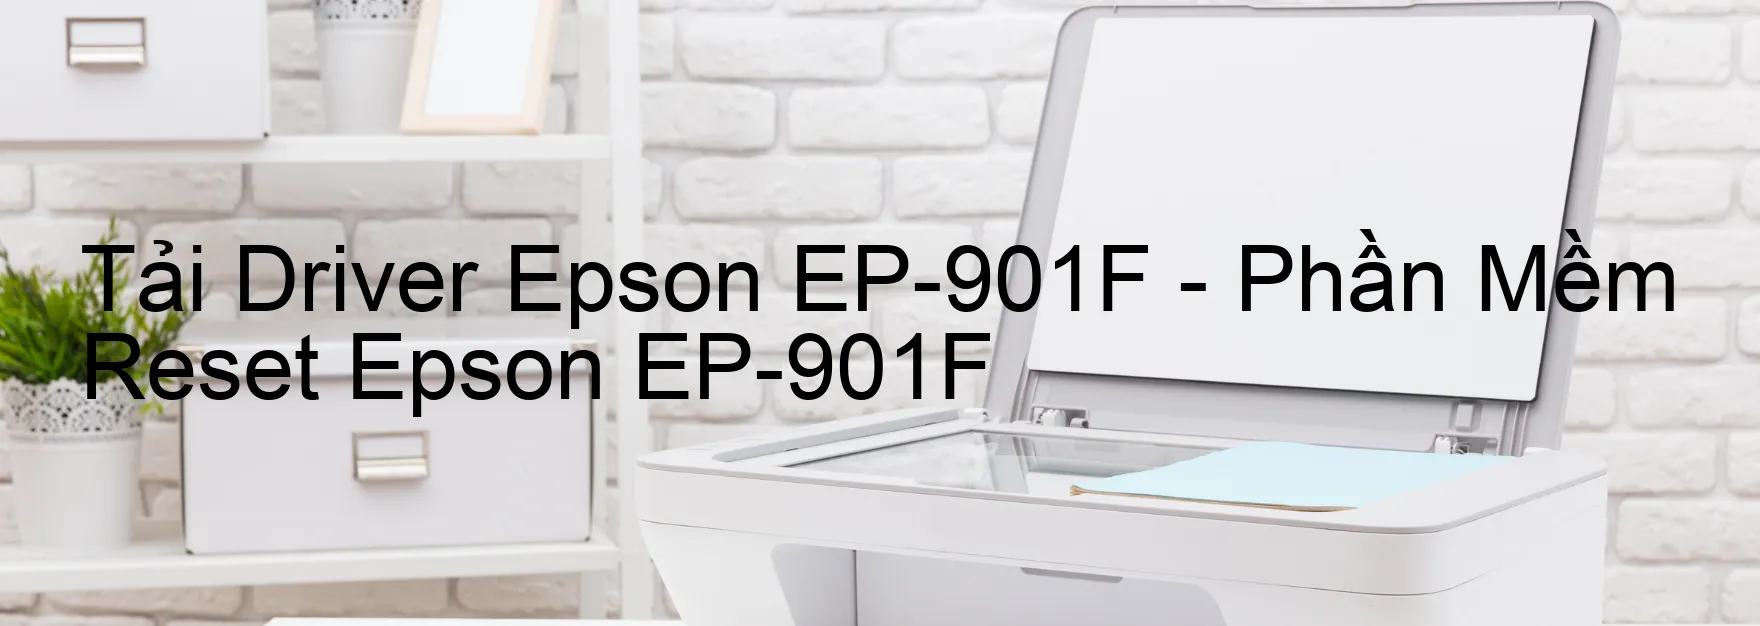 Driver Epson EP-901F, Phần Mềm Reset Epson EP-901F